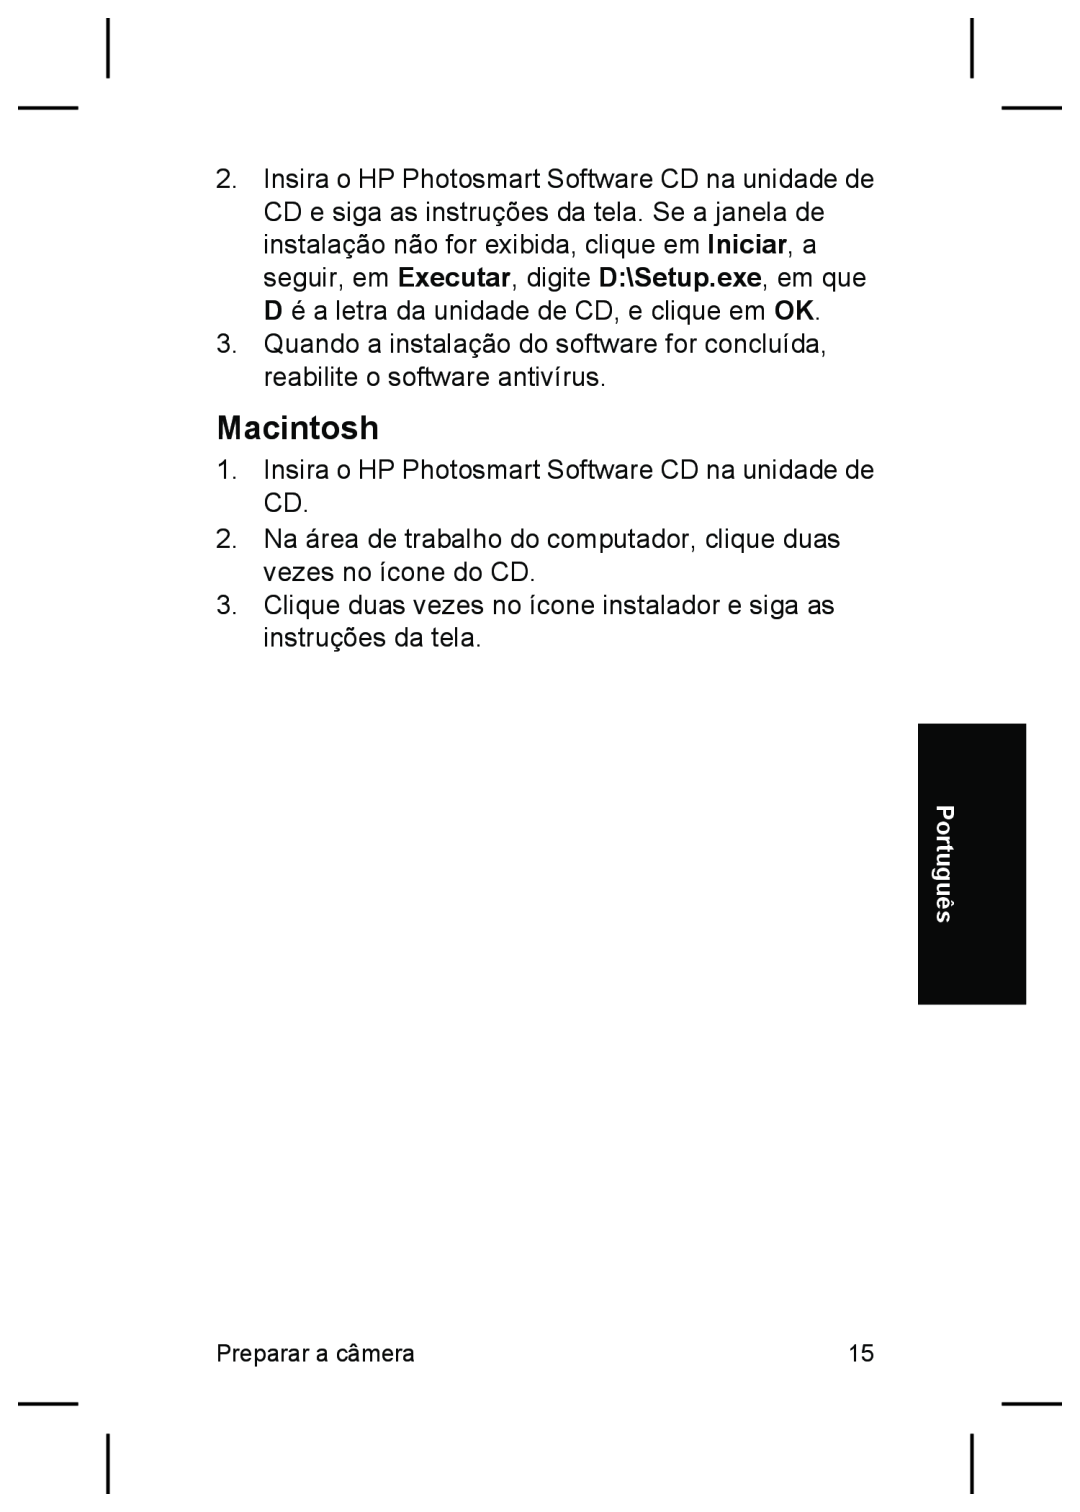 HP R927 manual Macintosh, Insira o HP Photosmart Software CD na unidade de CD 